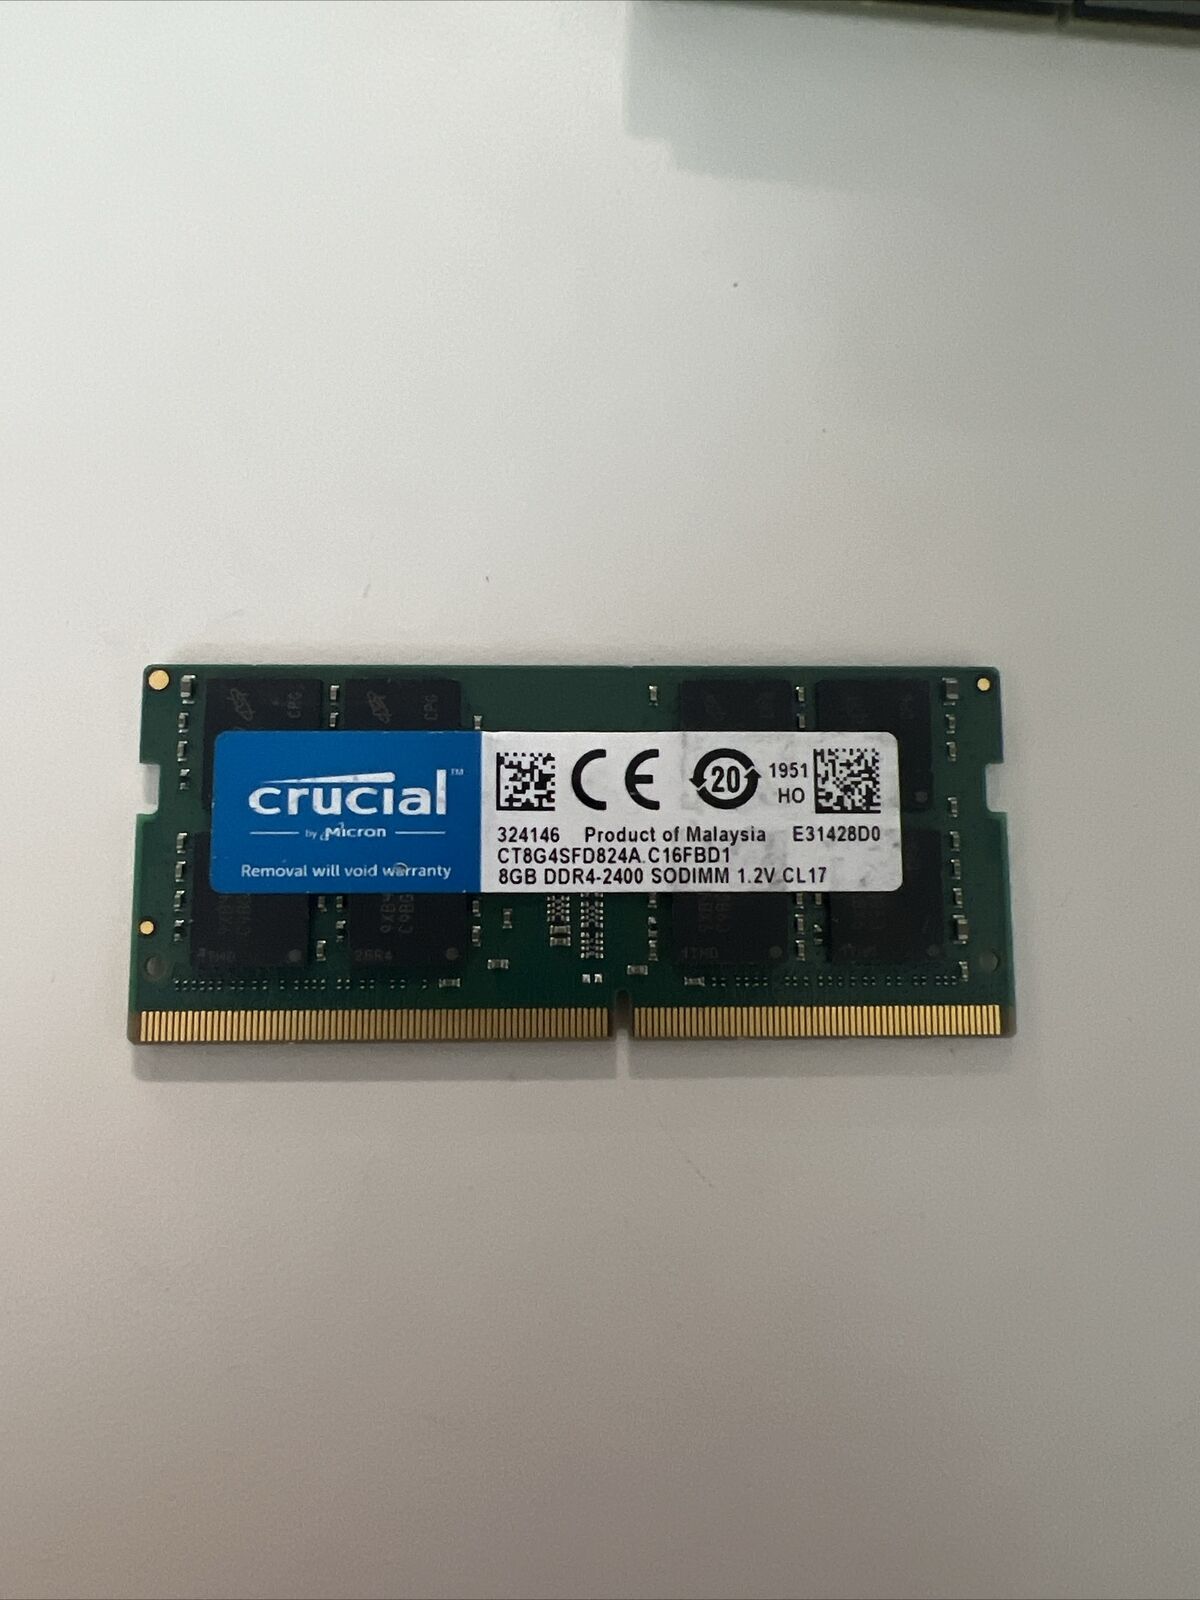 (8) Crucial 8GB DDR4-2400 PC4-19200 Sodimm Laptop Memory Ram- Fast Shipping